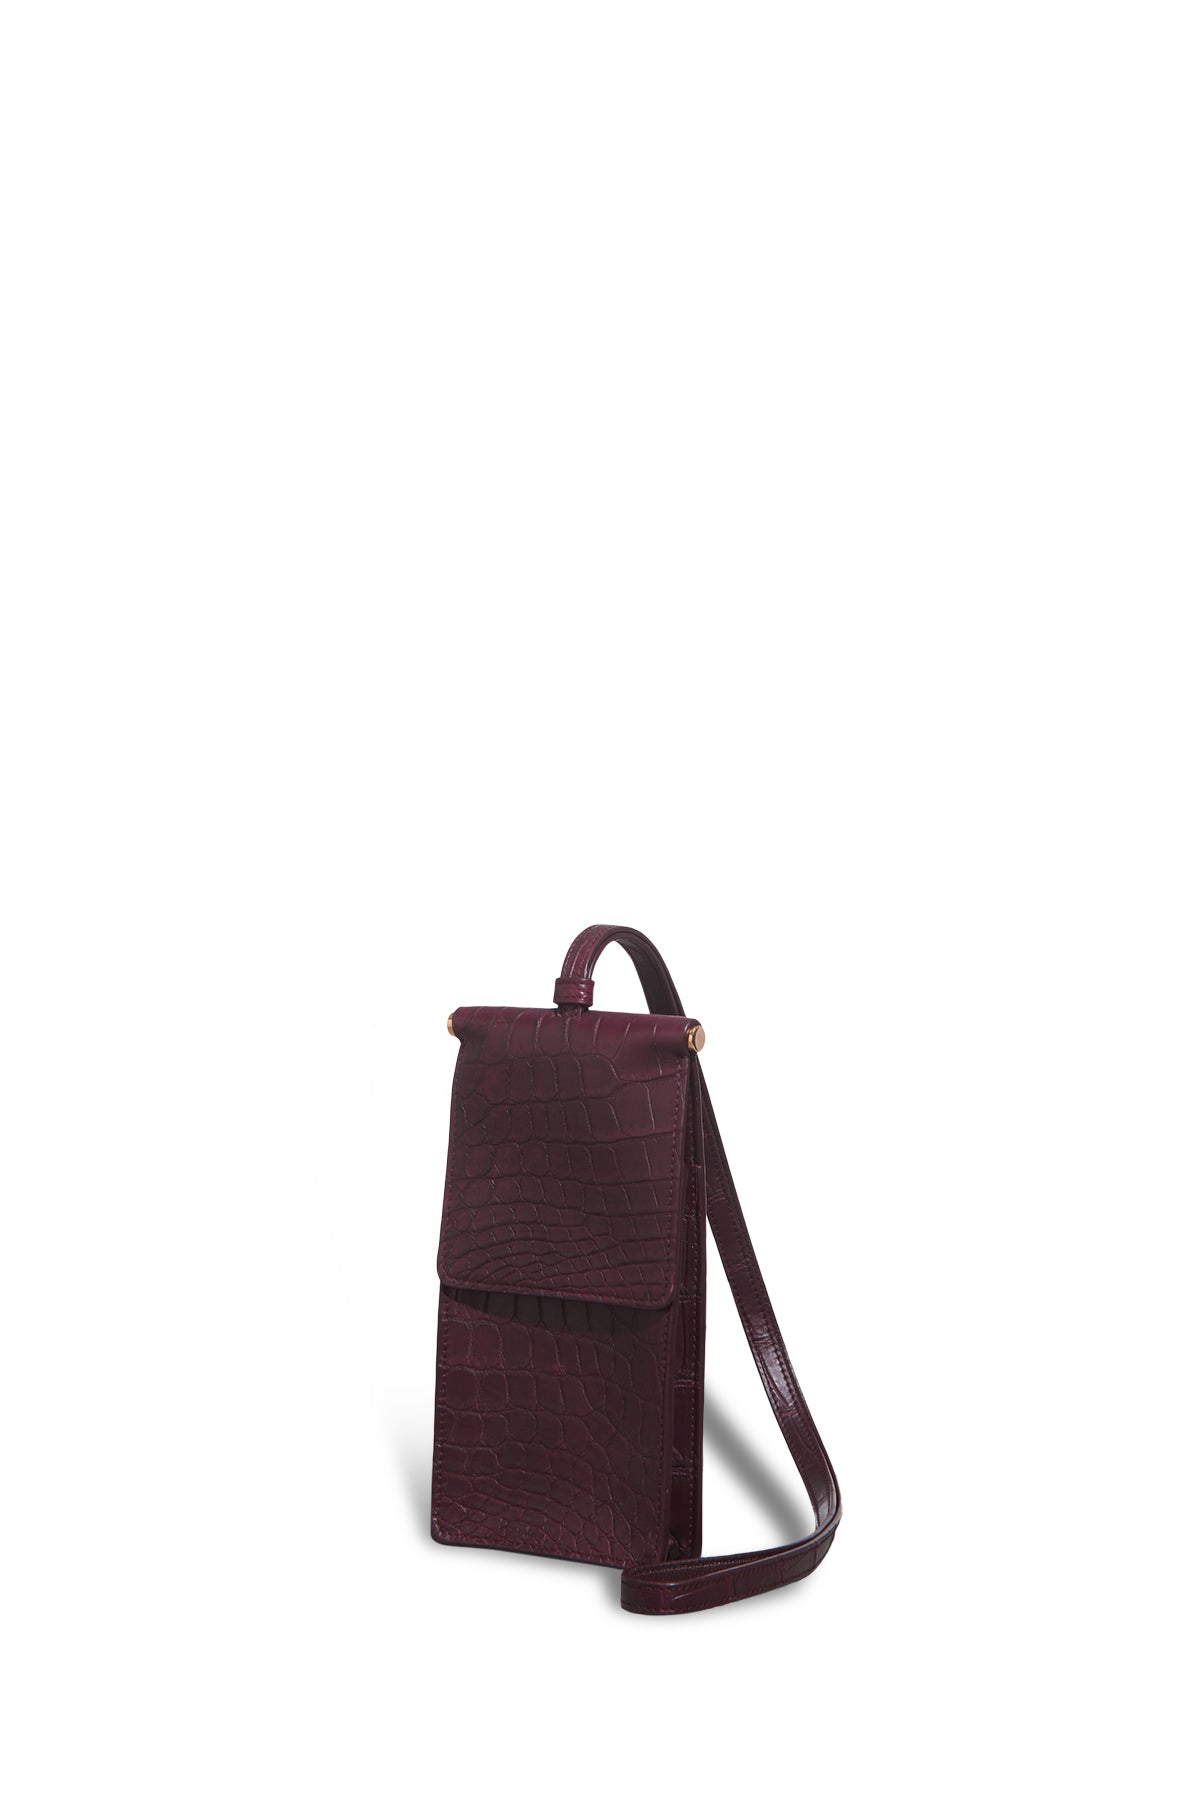 Cardi Necklace Bag in Bordeaux Crocodile Leather